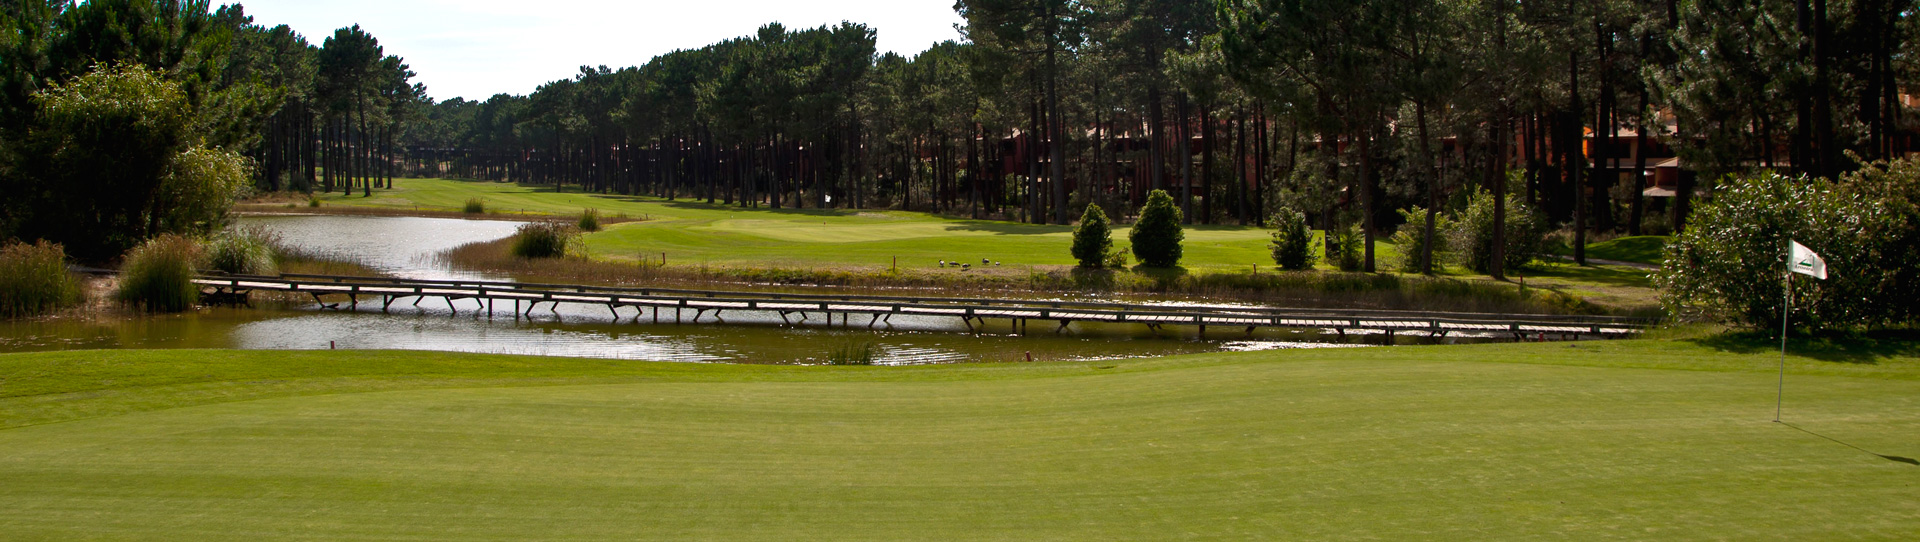 Portugal golf courses - Aroeira Challenge Golf Course (ex Aroeira II)  - Photo 3